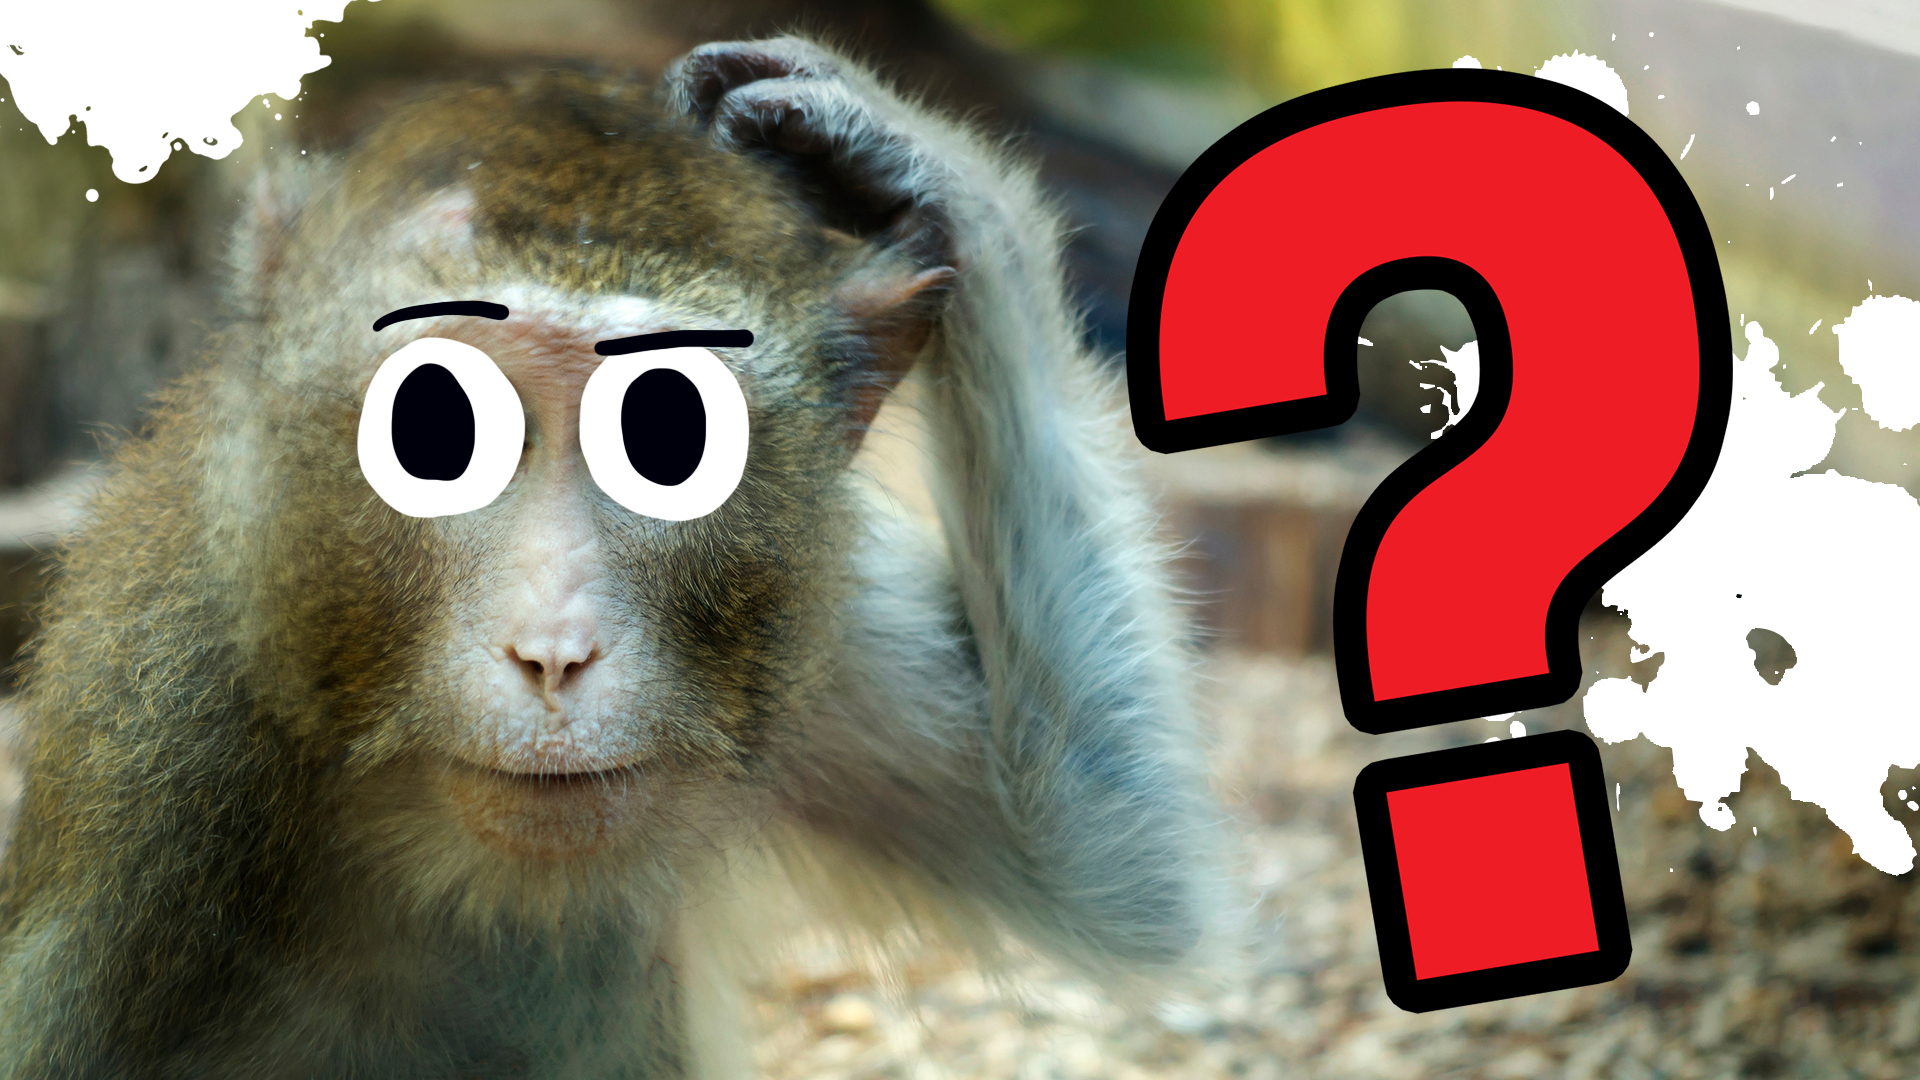 A monkey thinks